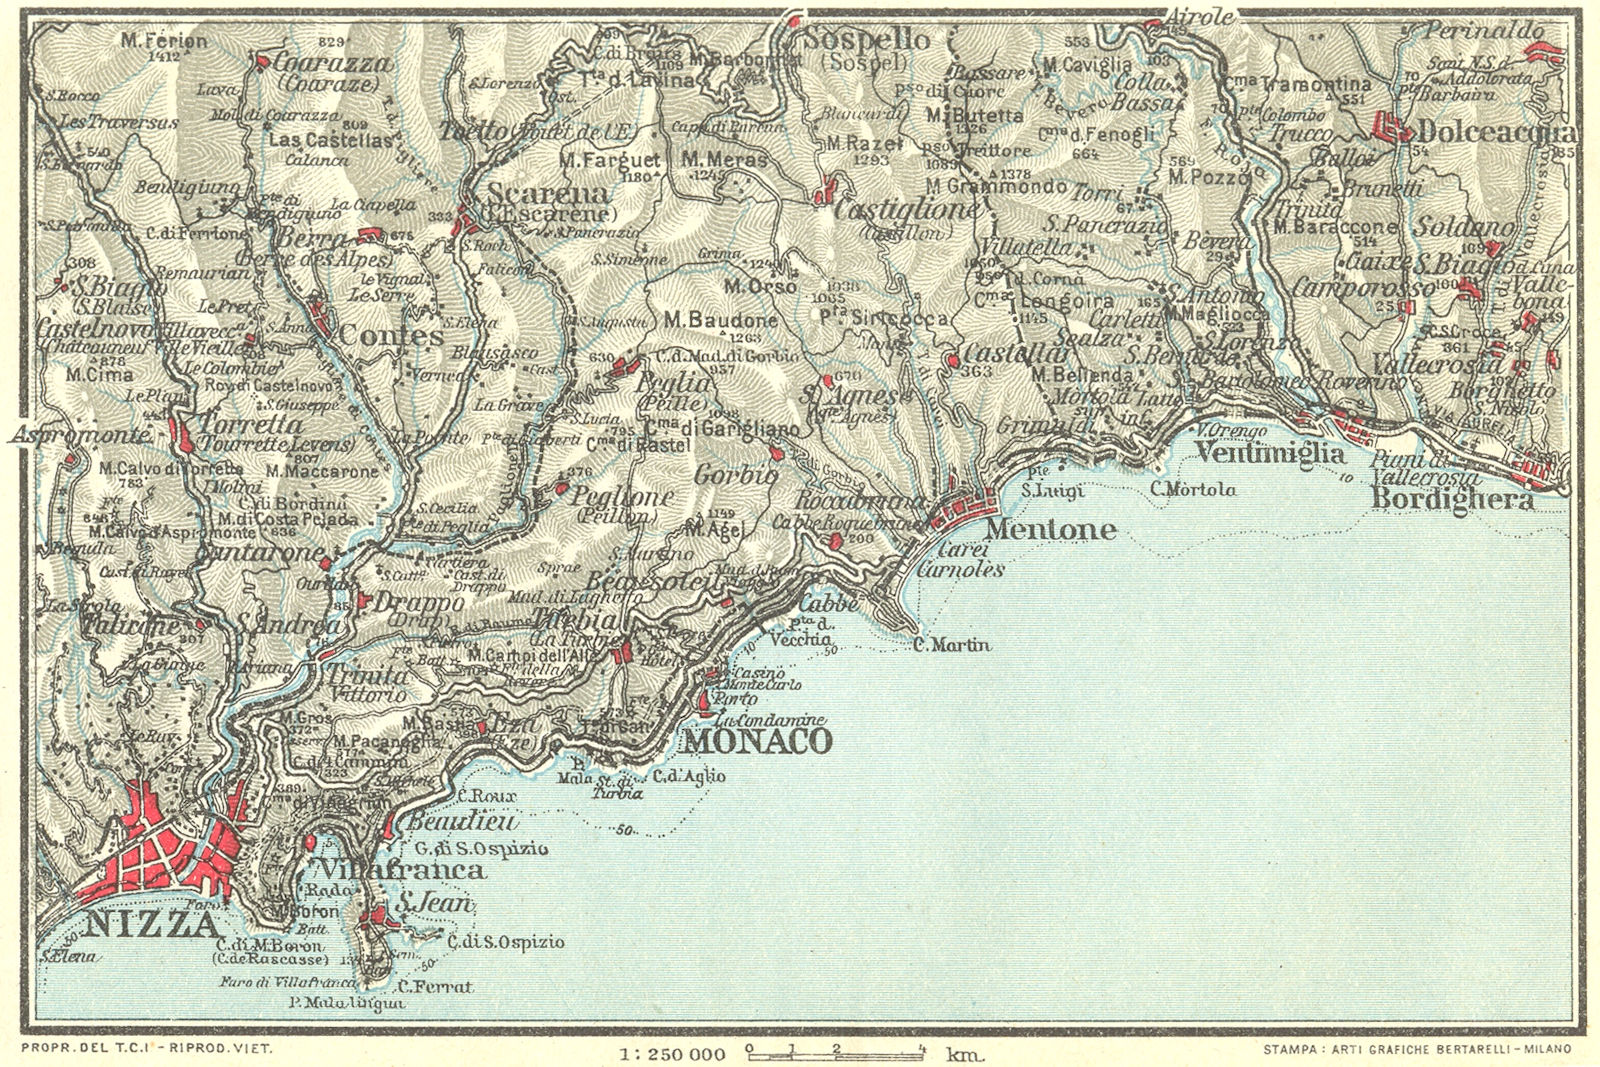 CÔTE D'AZUR. Nizza (Nice) Nice Monaco Menton Bordighera Villefranche 1927 map